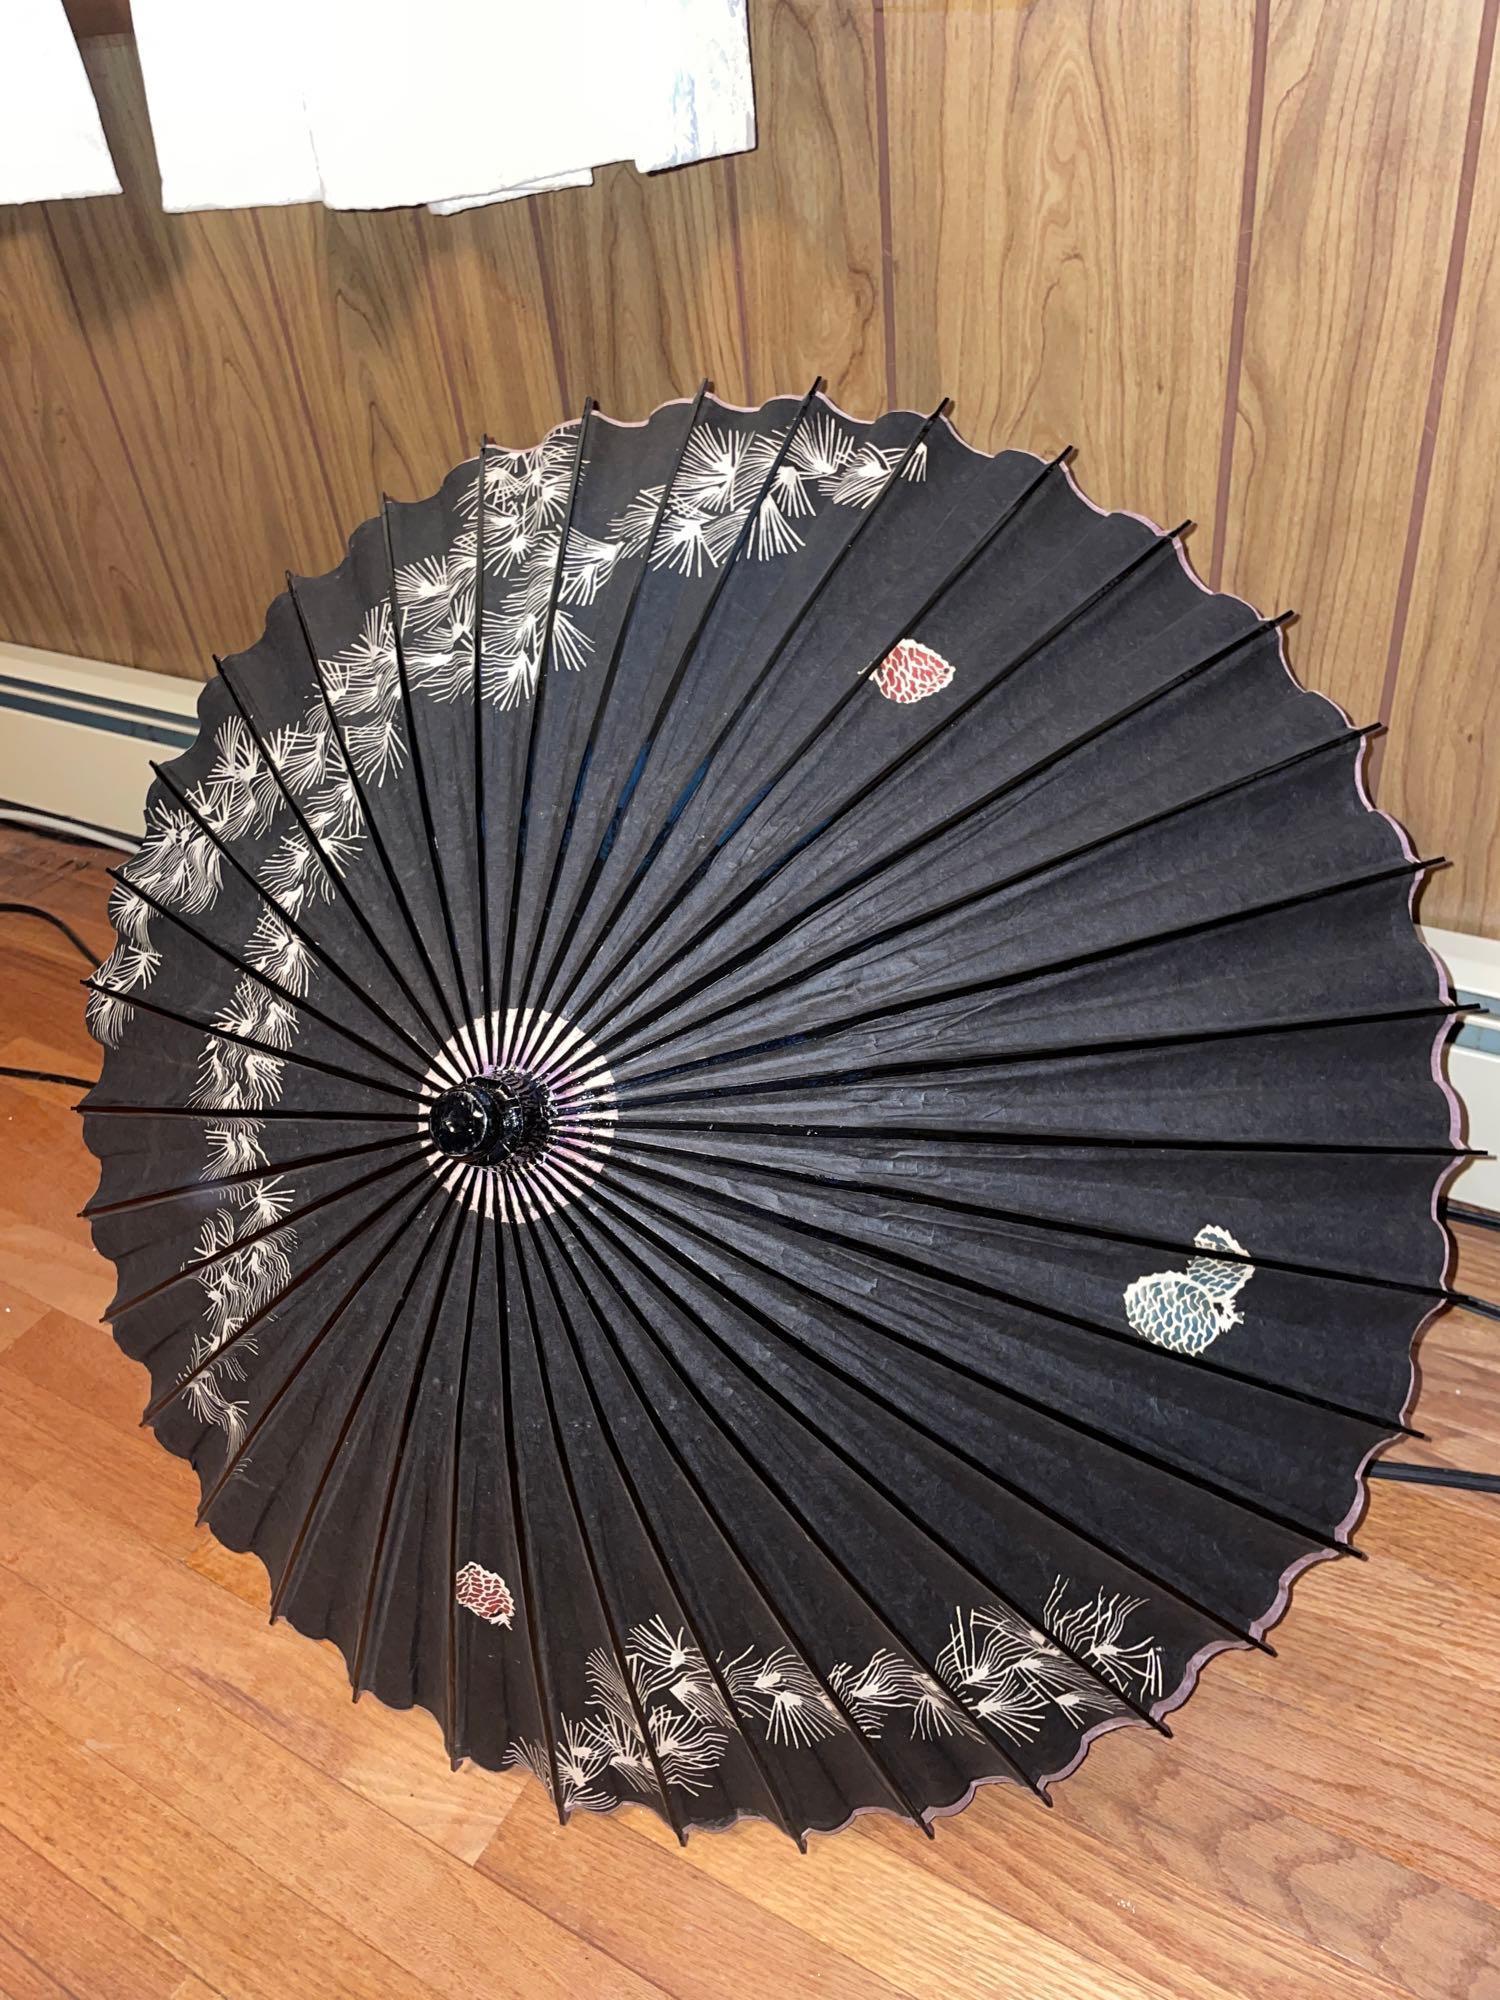 Vintage Handcrafted Japanese Umbrella